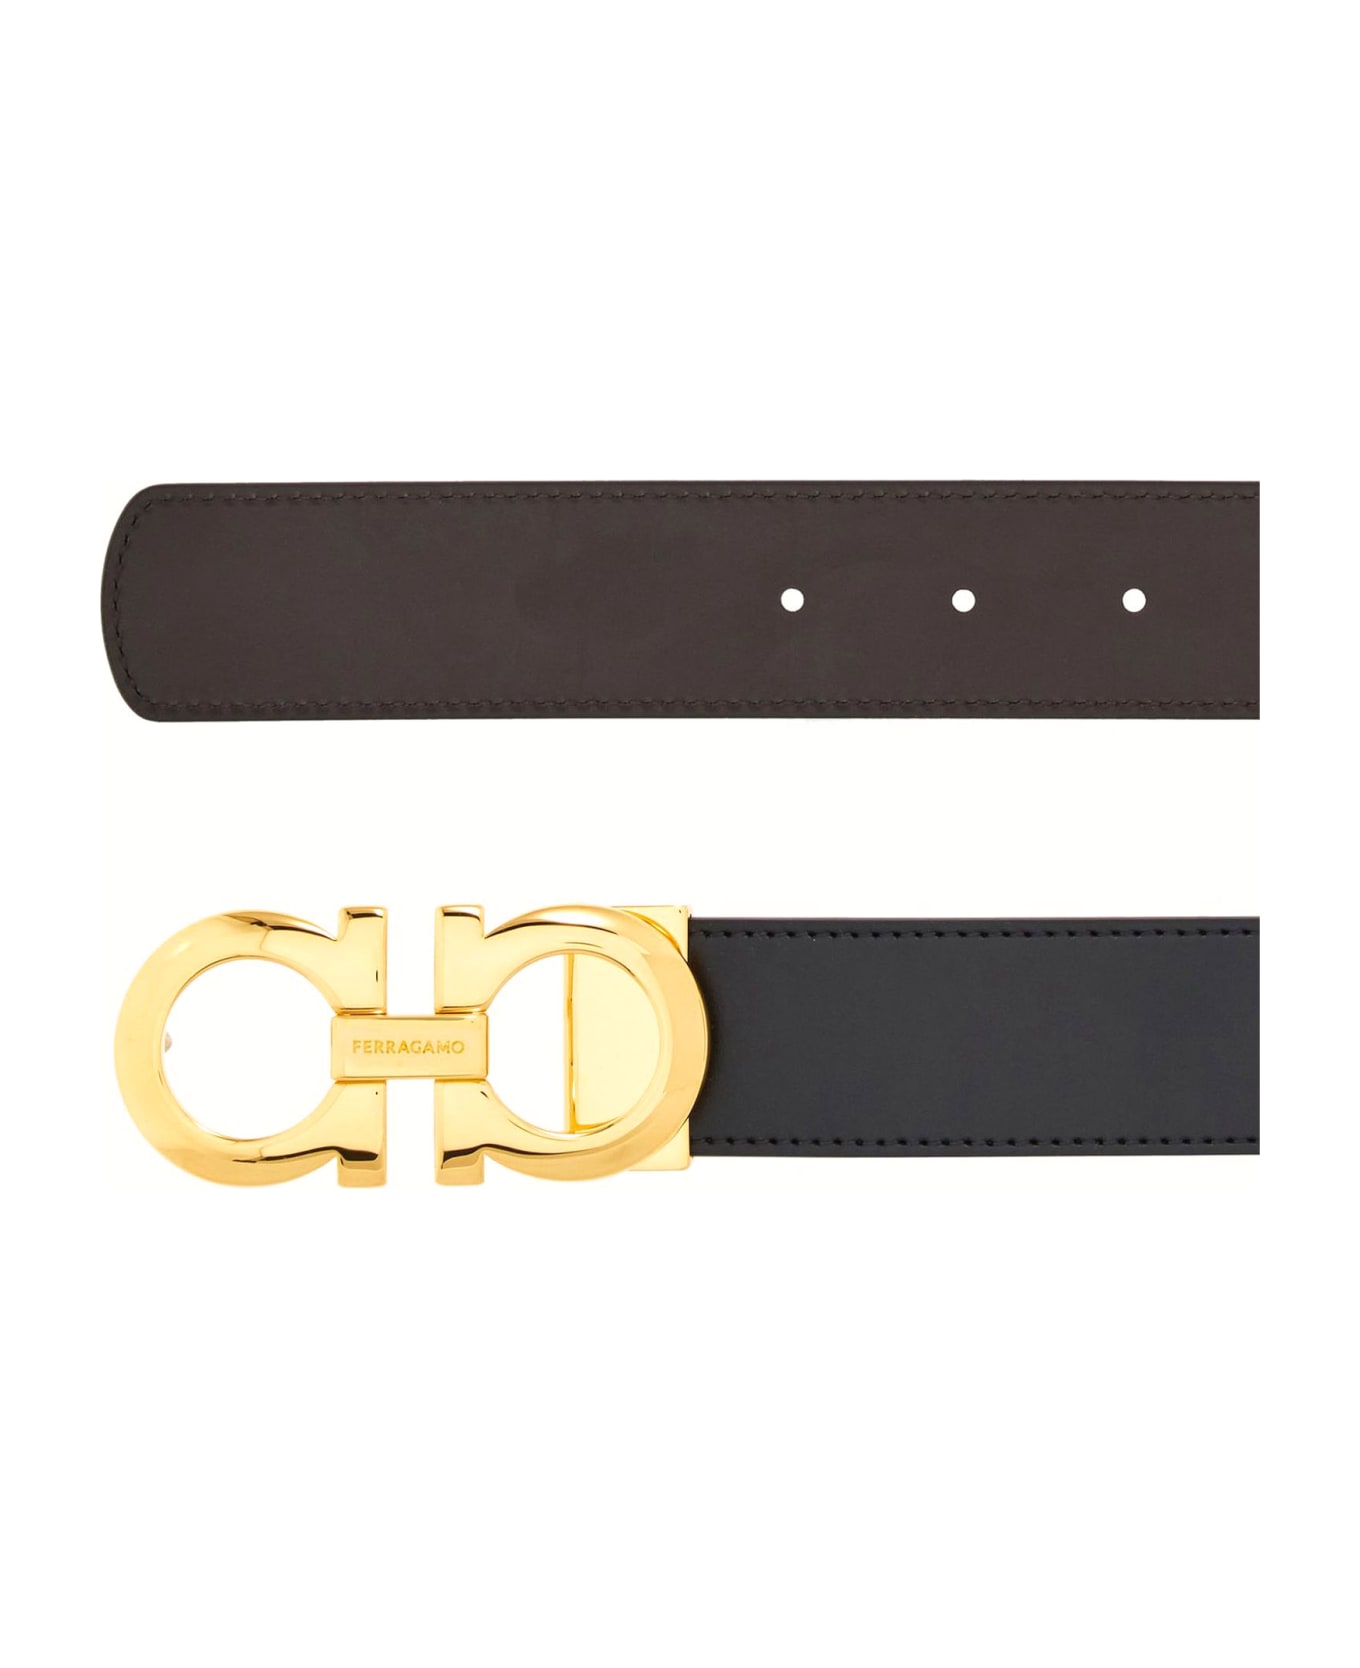 Ferragamo Reversible And Adjustable Gancini Belt - Black